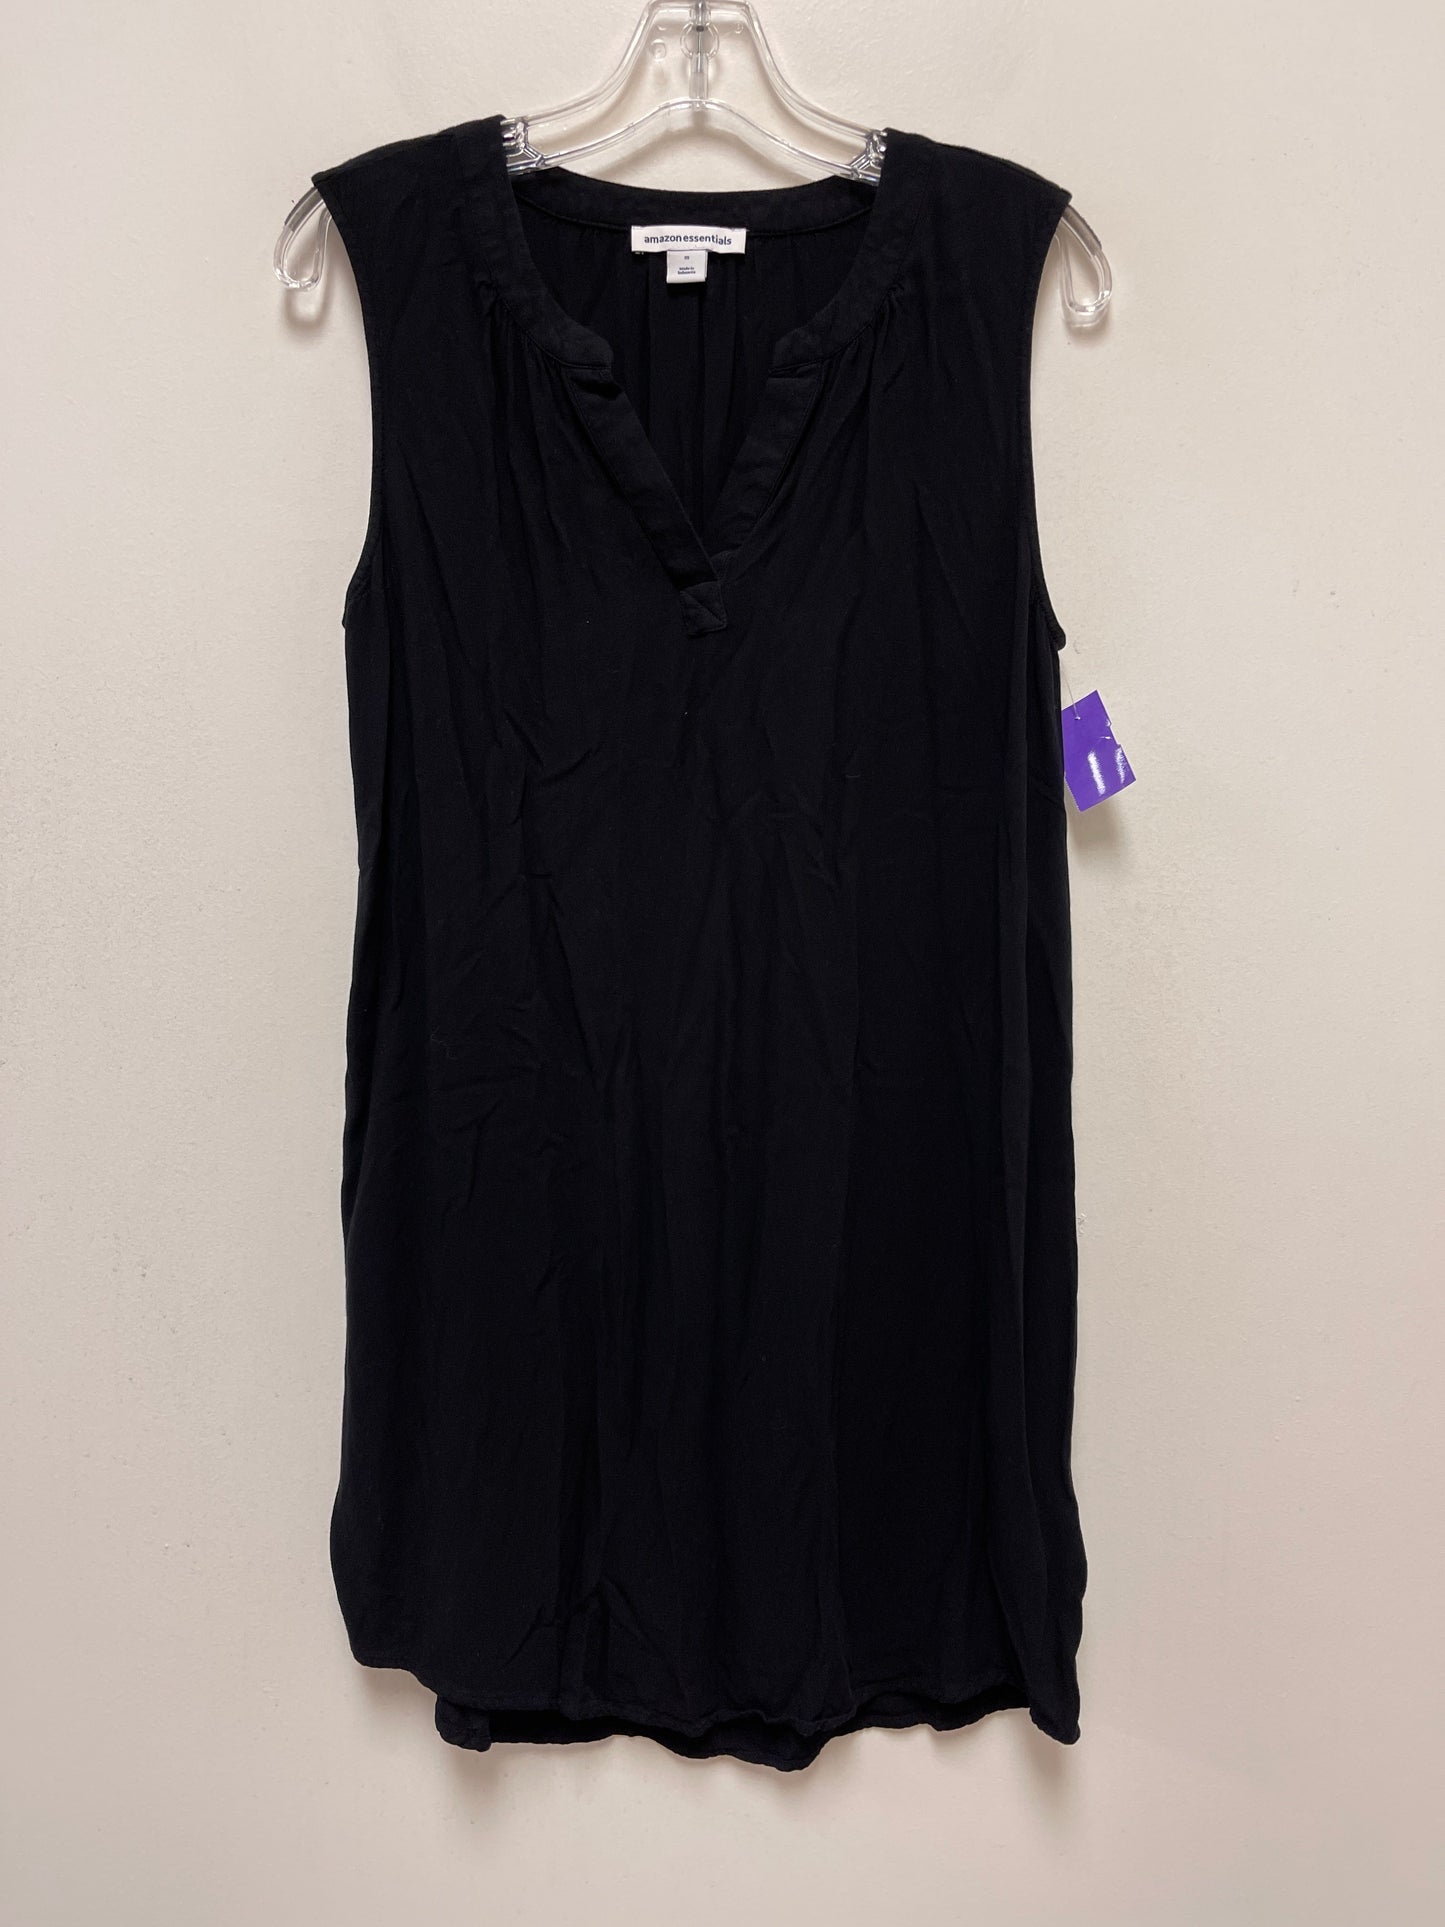 Black Dress Casual Short Amazon Essentials, Size M